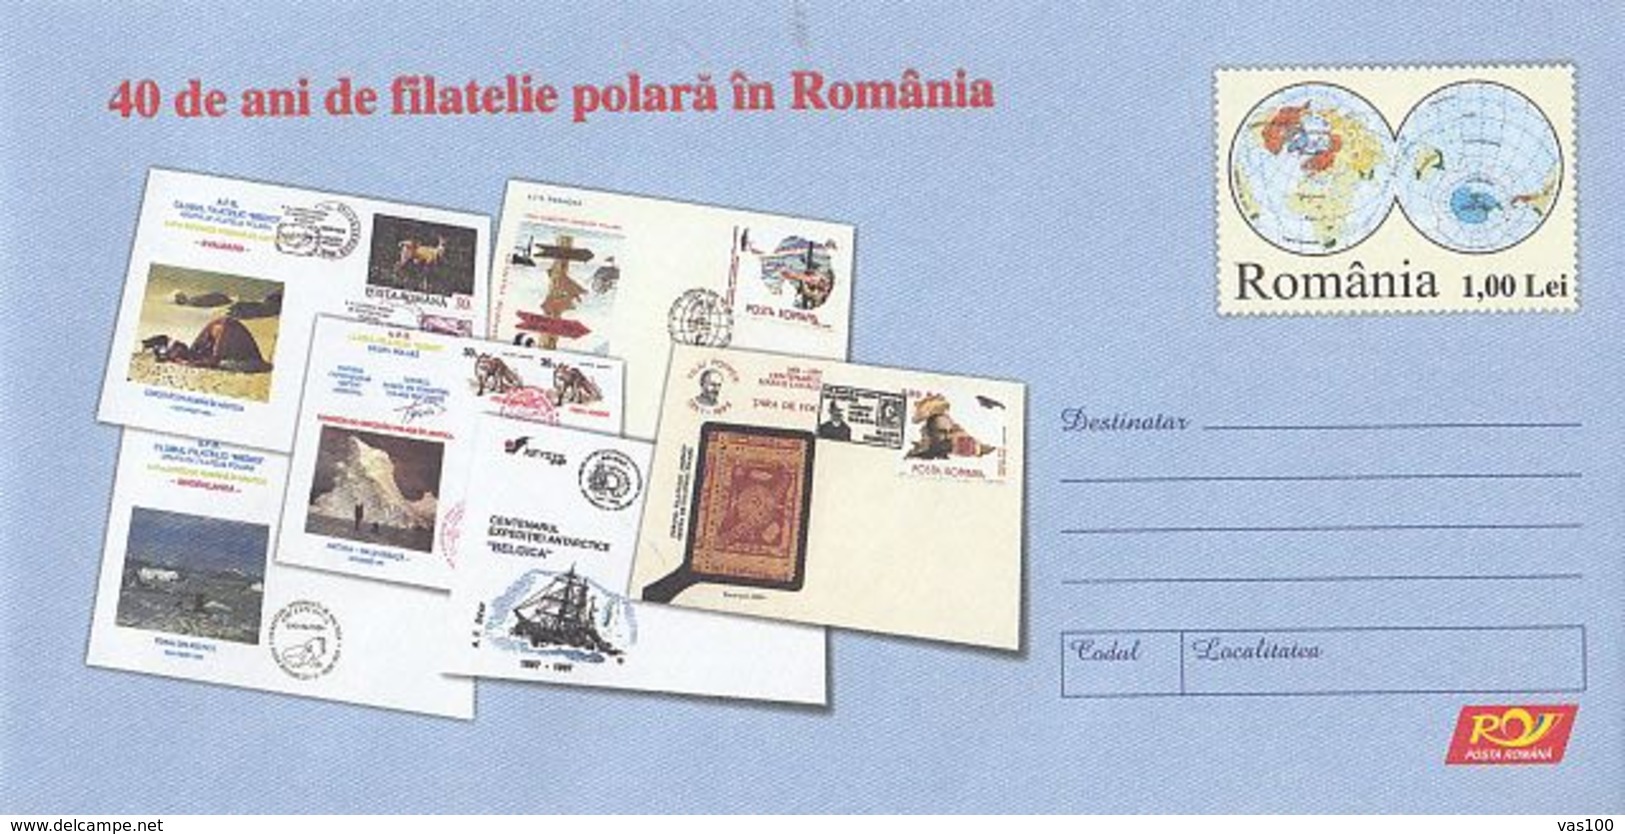 POLAR PHILATELY IN ROMANIA, PHILATELIC EXHIBITIONS, COVER STATIONERY, ENTIER POSTAL, 2008, ROMANIA - Events & Gedenkfeiern